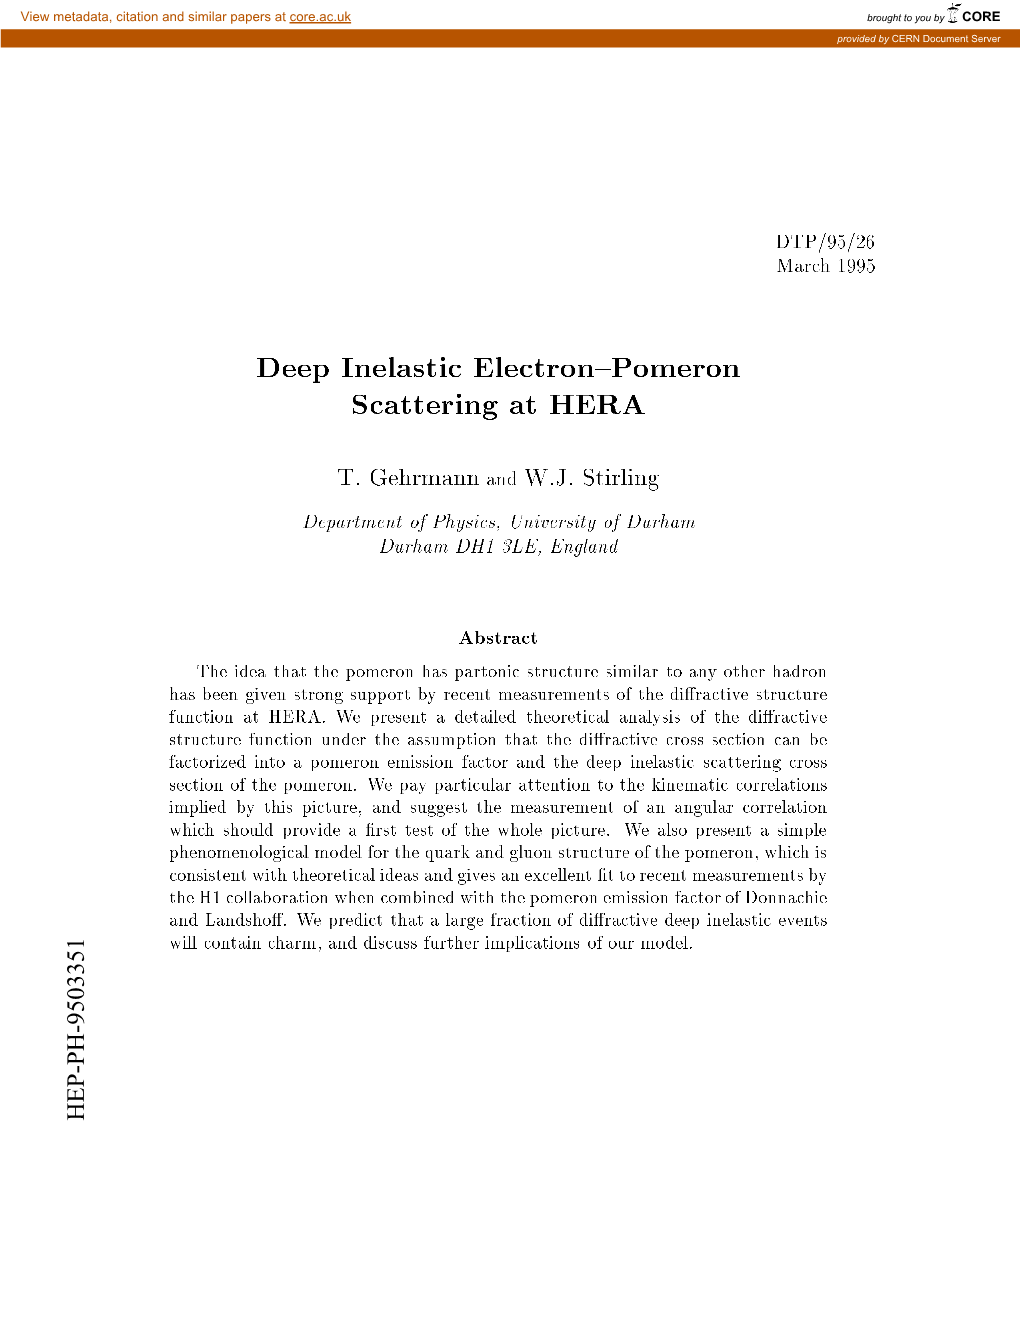 Deep Inelastic Electron{Pomeron Scattering at HERA